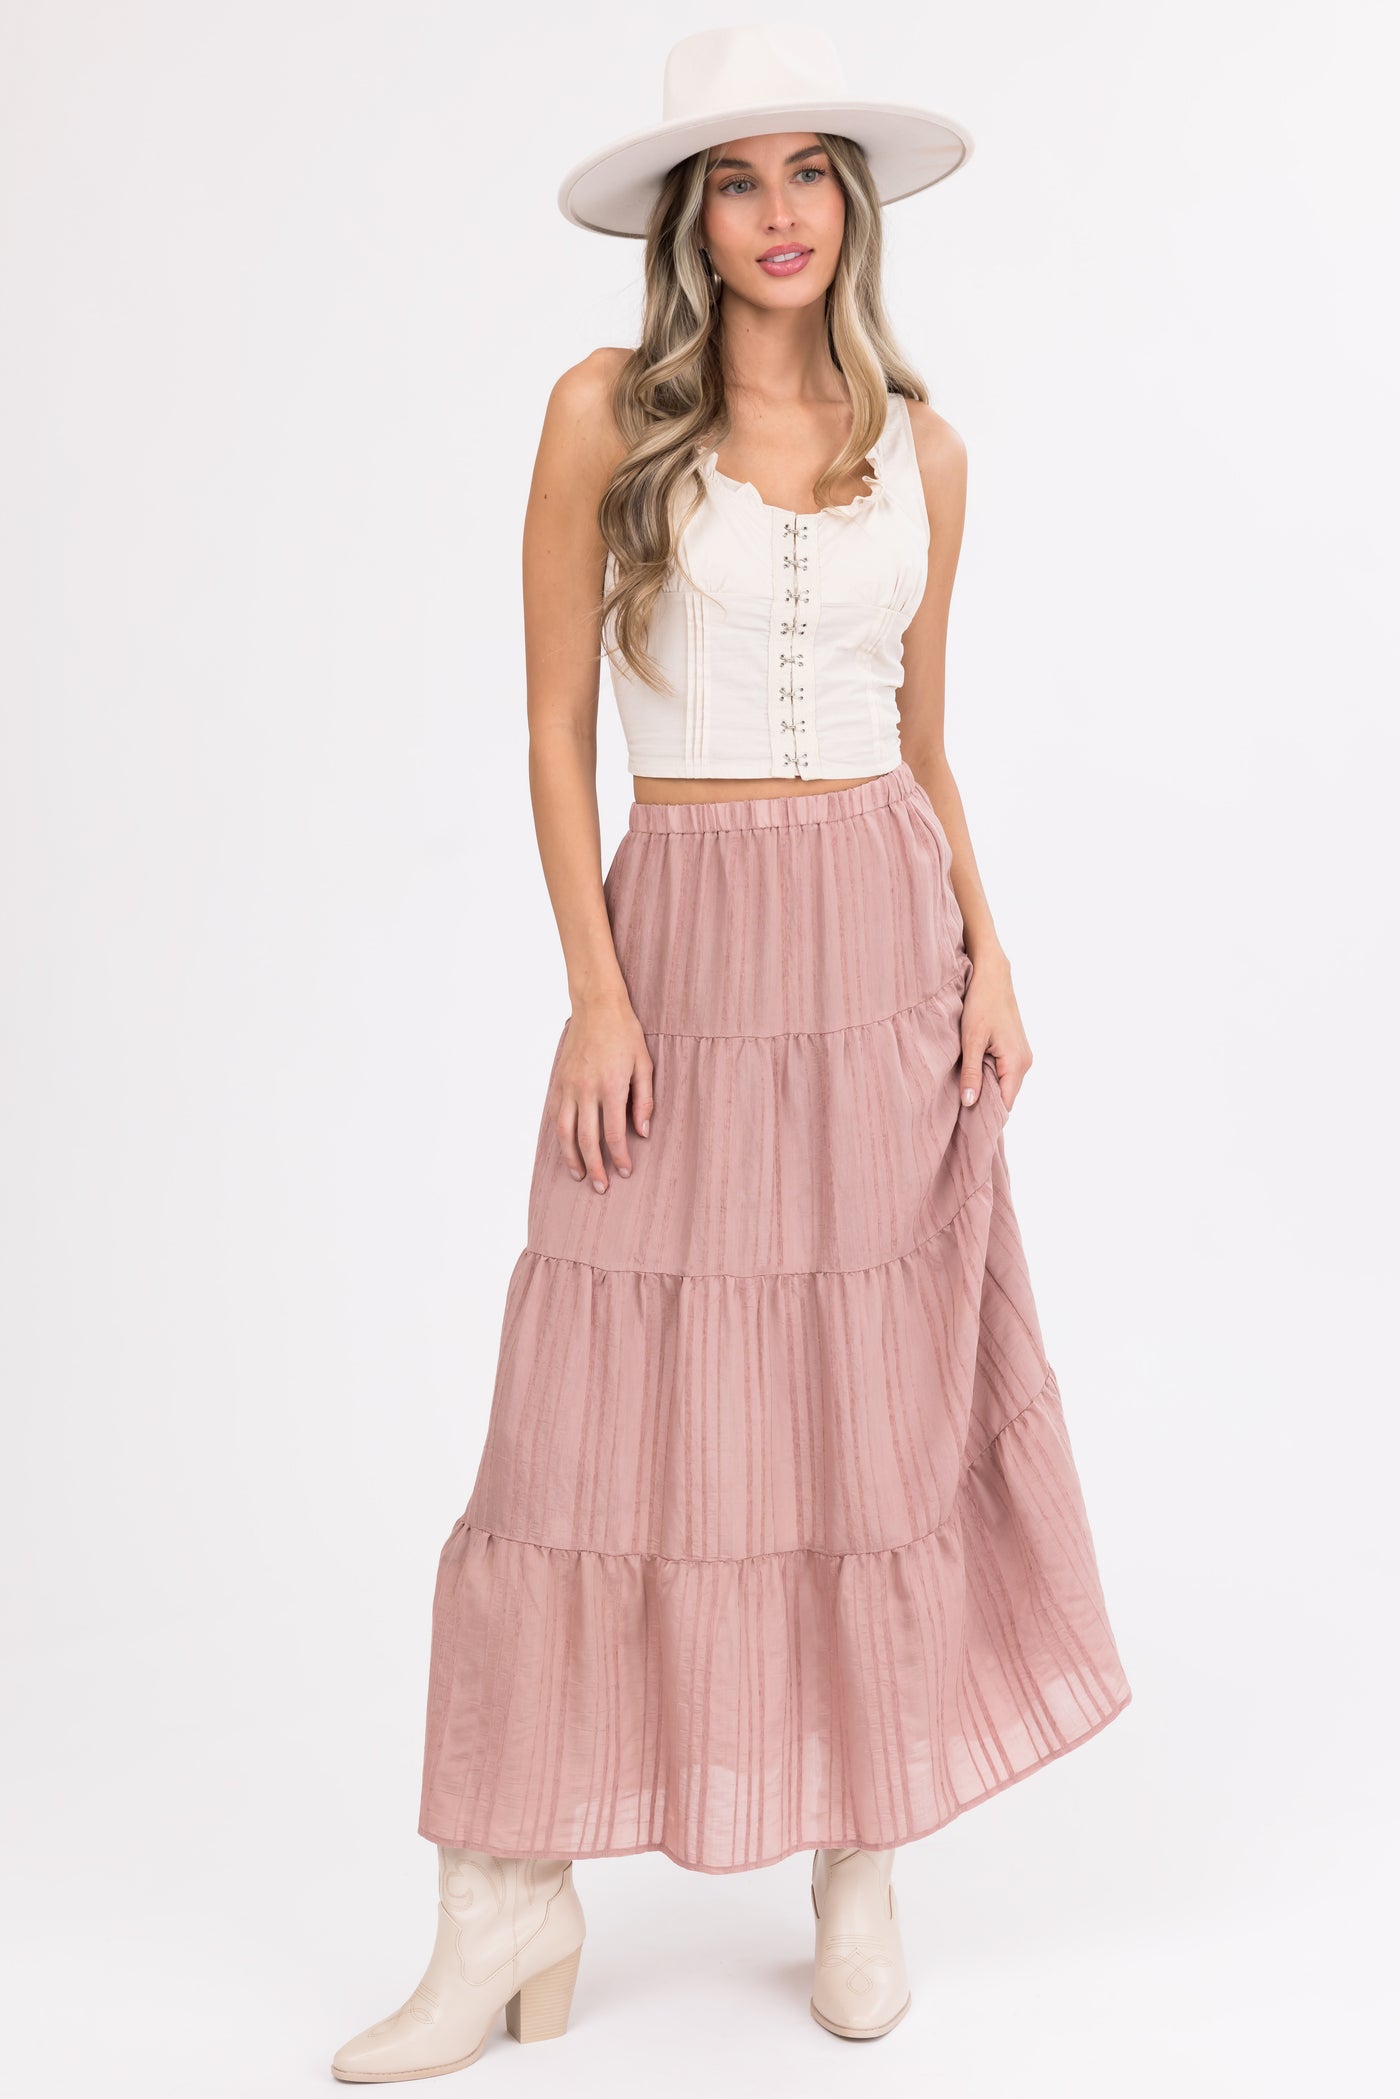 Vintage Rose Textured Tiered Maxi Skirt